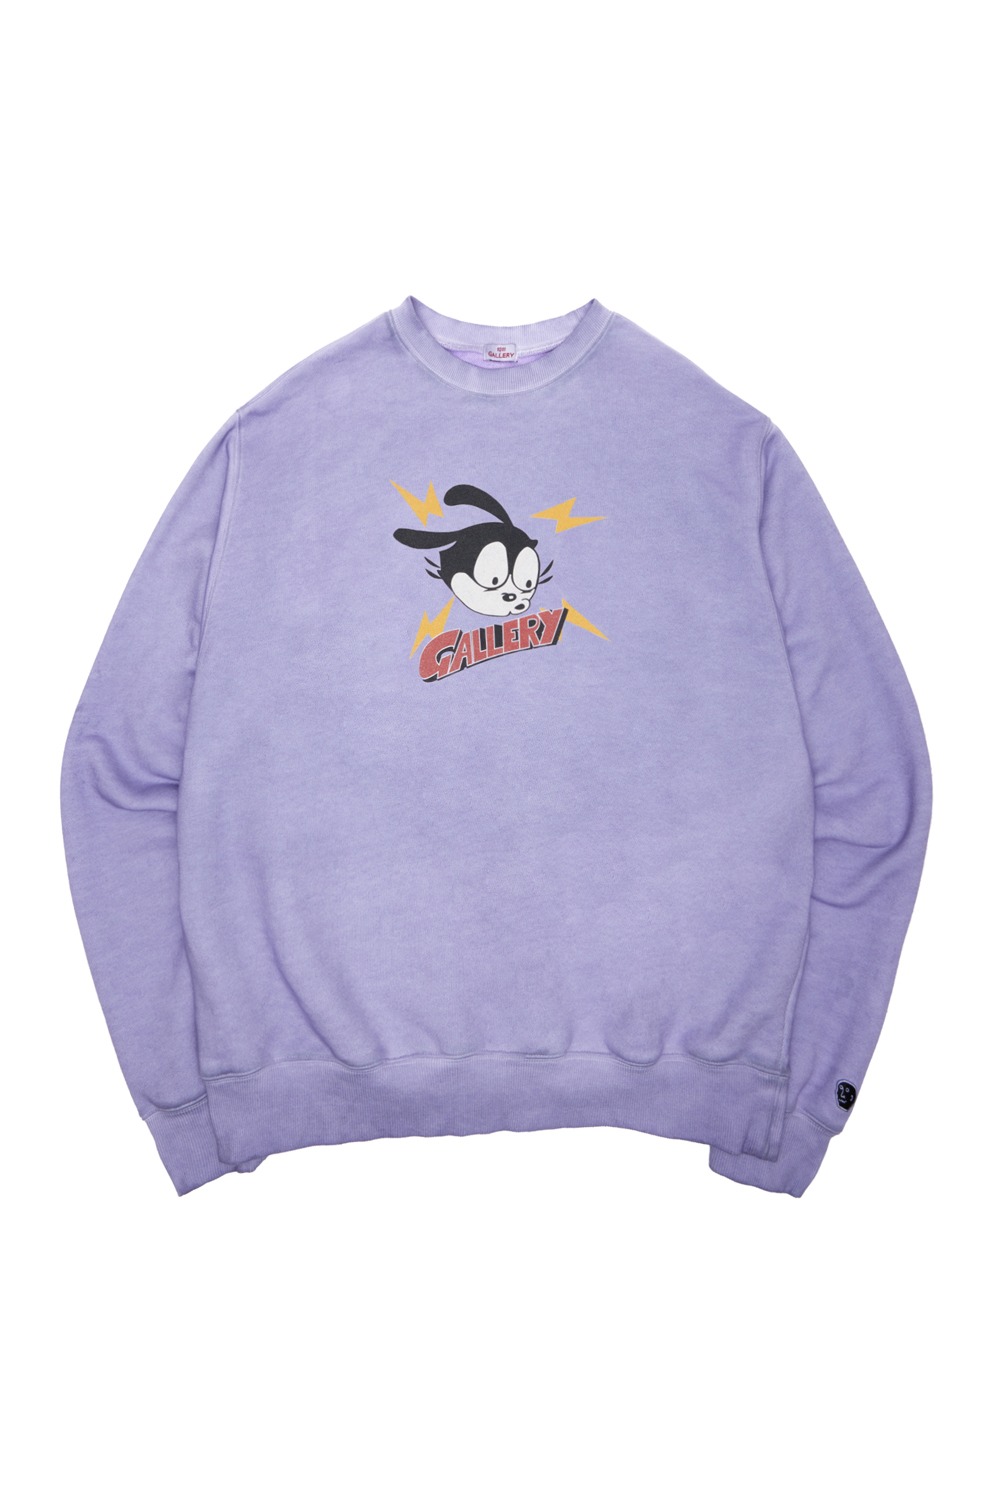 Gallery Rabbit Graphic Sweatshirt - Light Purple